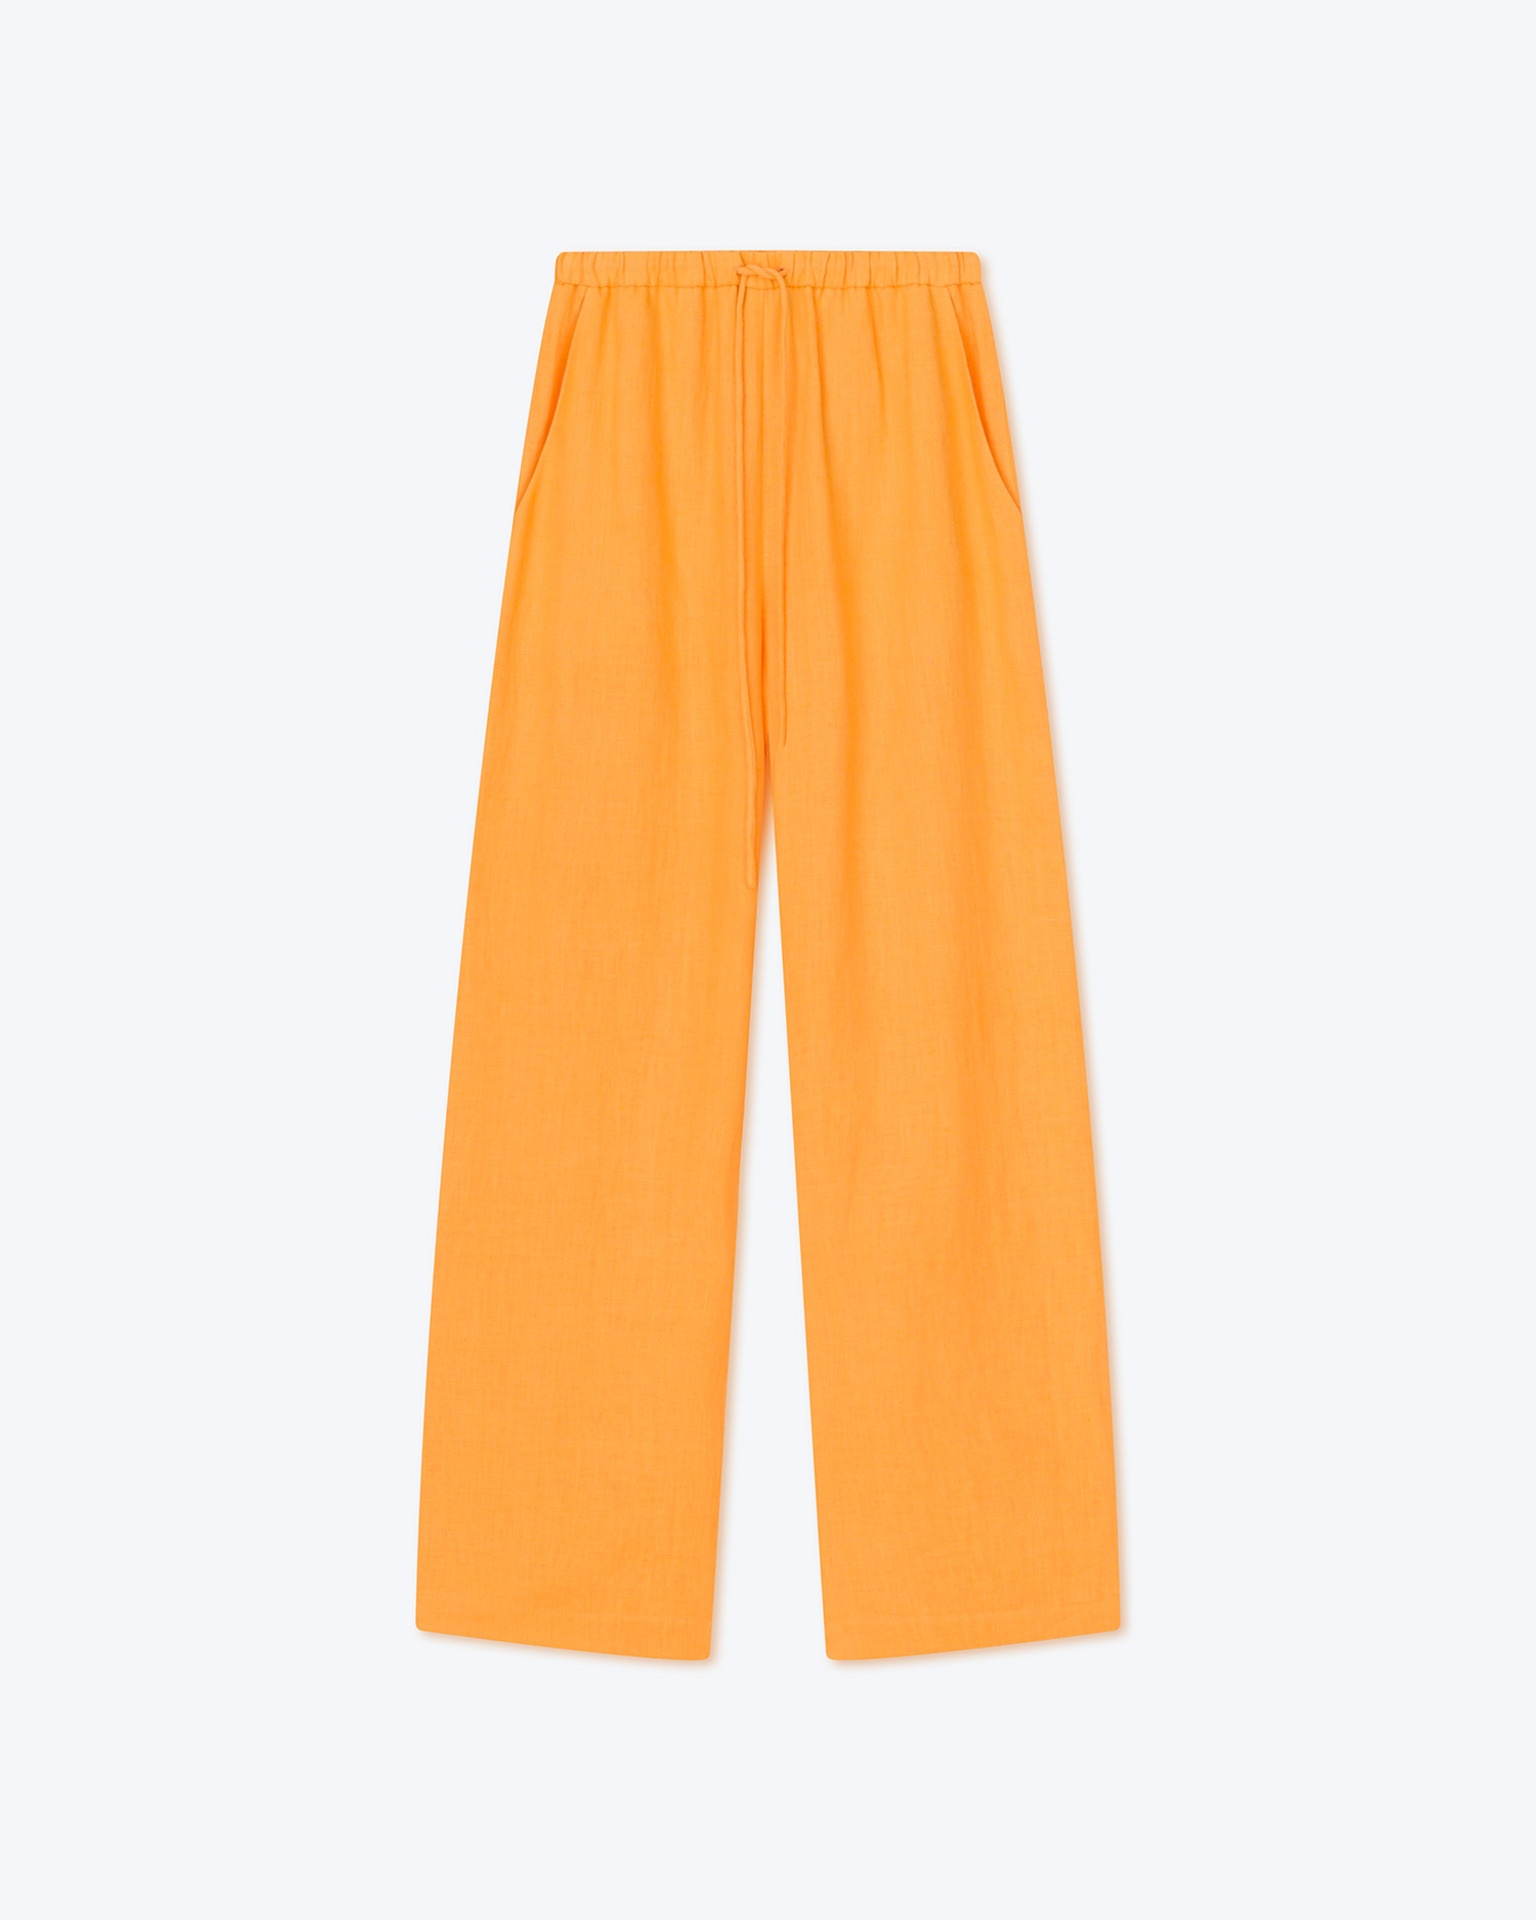 POLYKA - Linen pants - Orange - 1